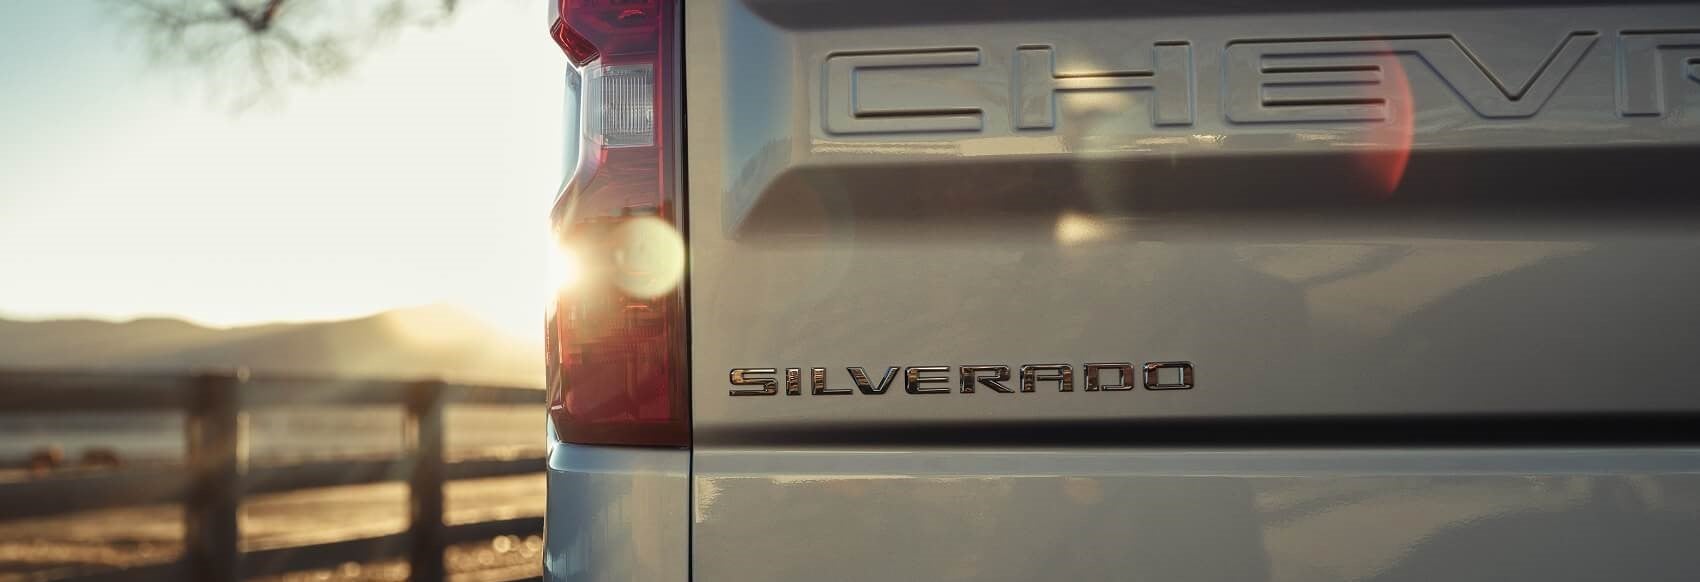 Chevy Silverado 1500 Trim Levels